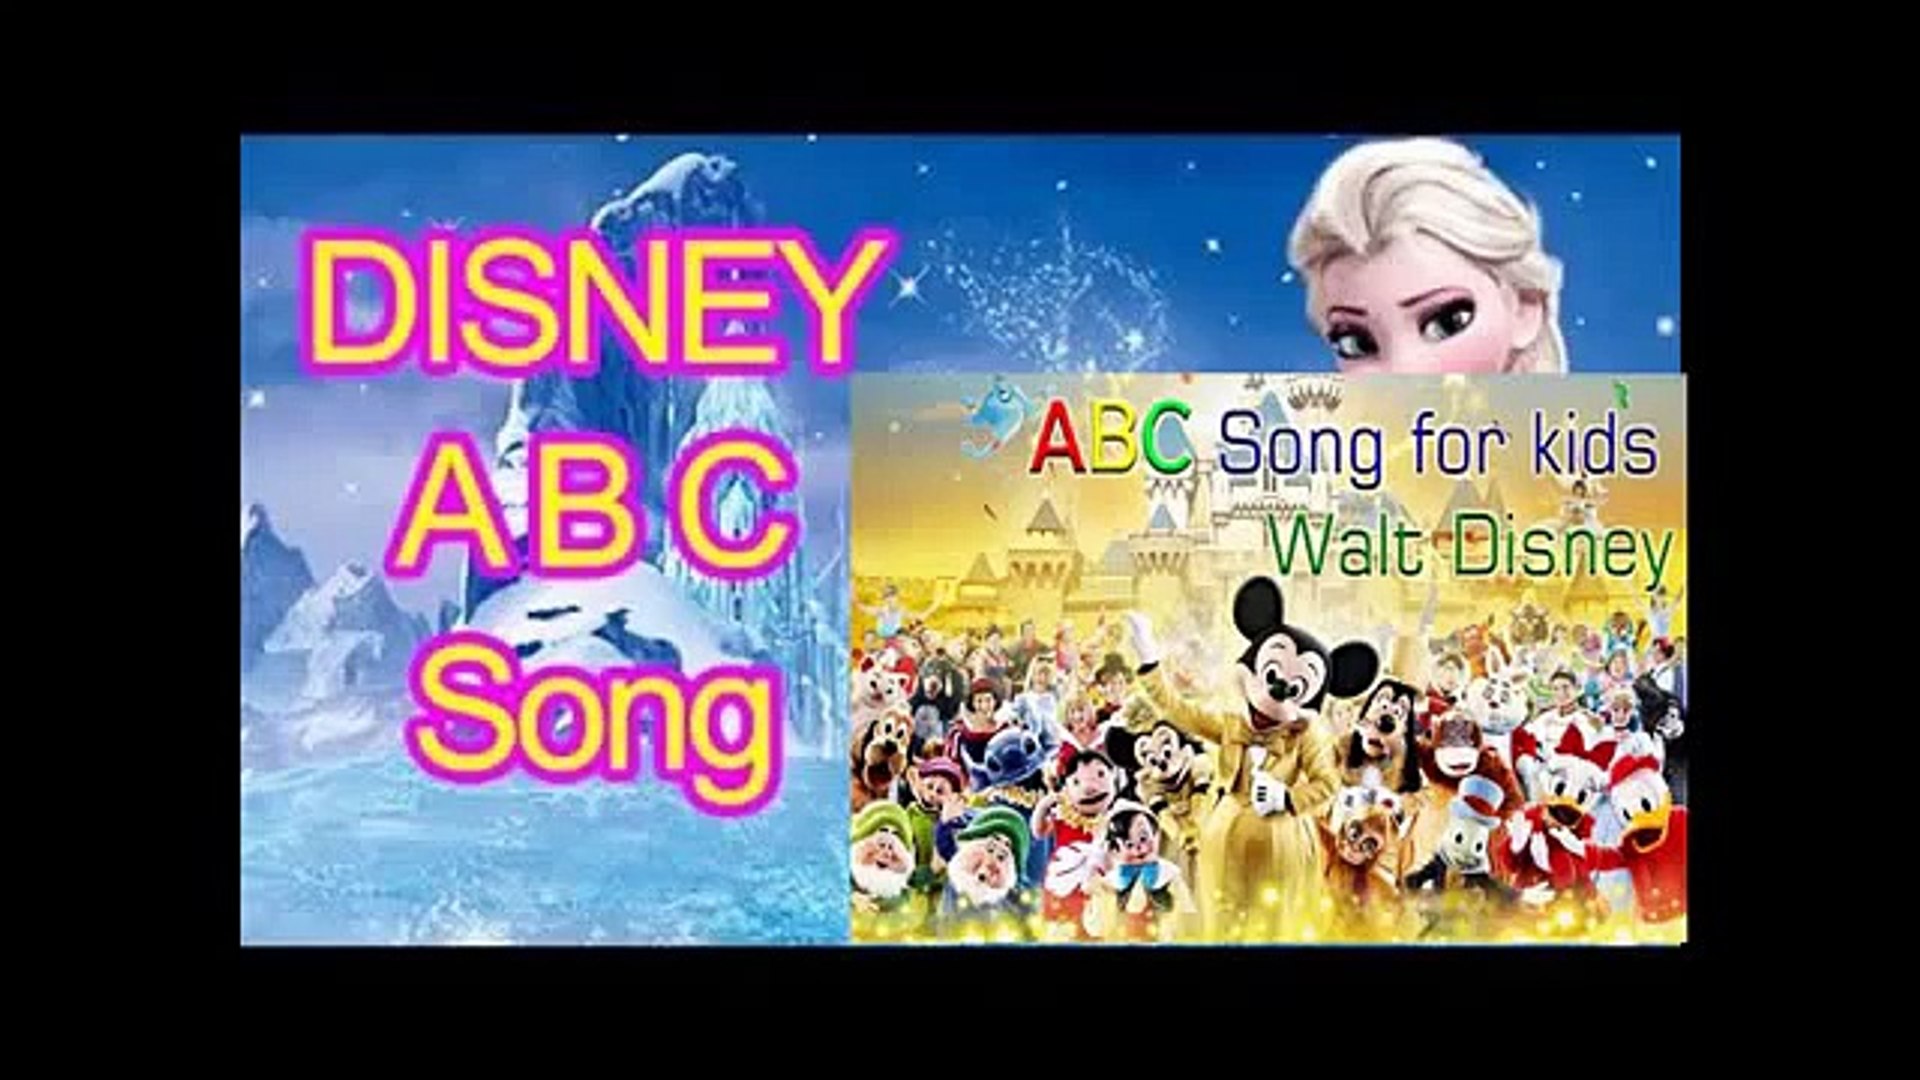 ABC Songs - ABC (The Alphabet Song) Lyrics - ABC Songs for Children